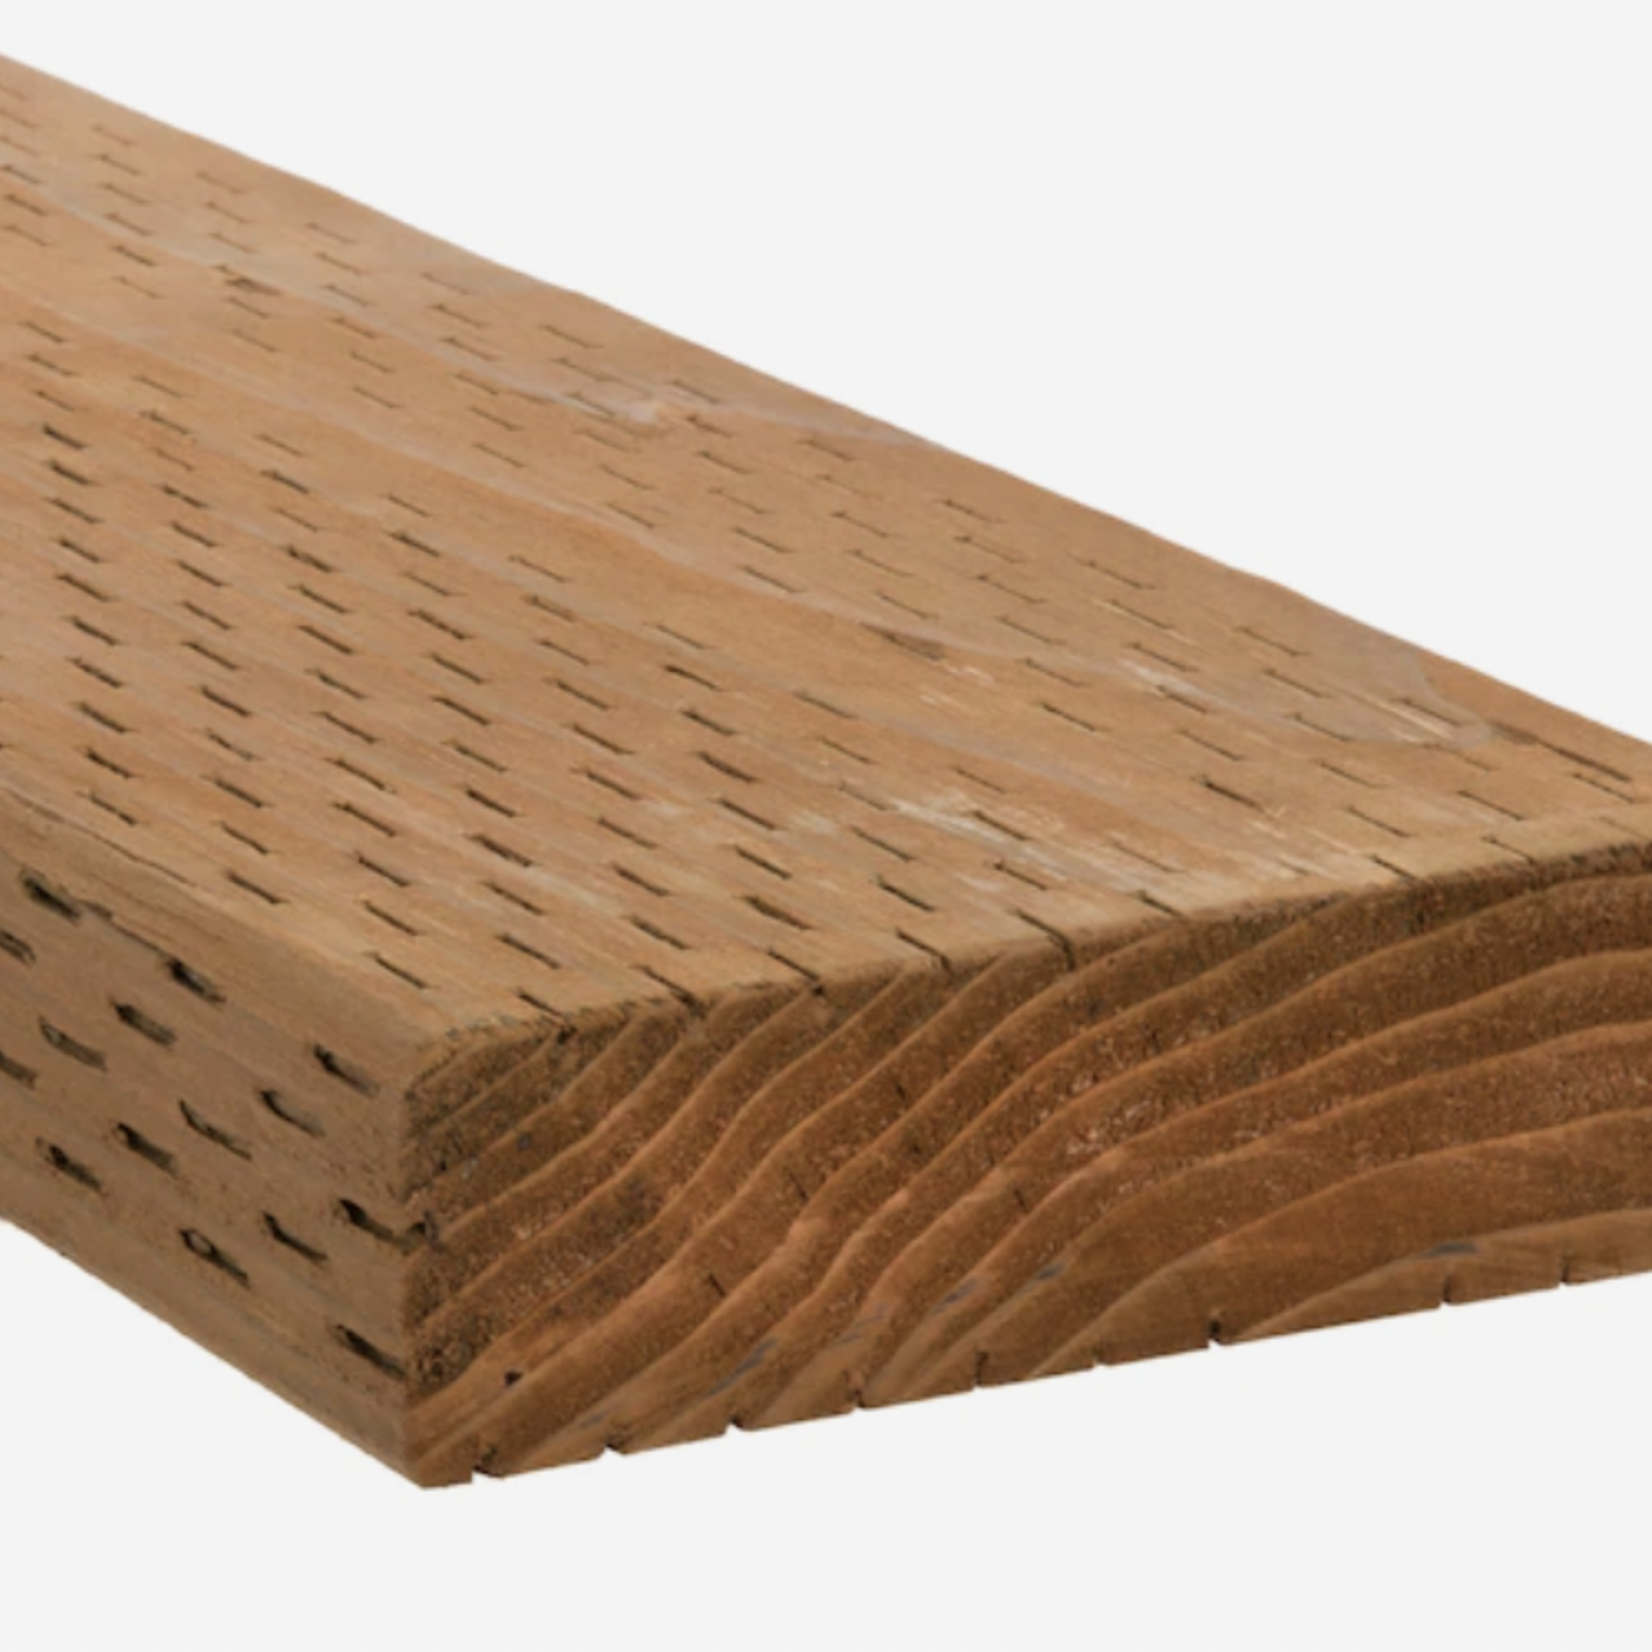 2 in. x 8 in. x 8 ft. Hem/Fir Pressure-Treated Lumber